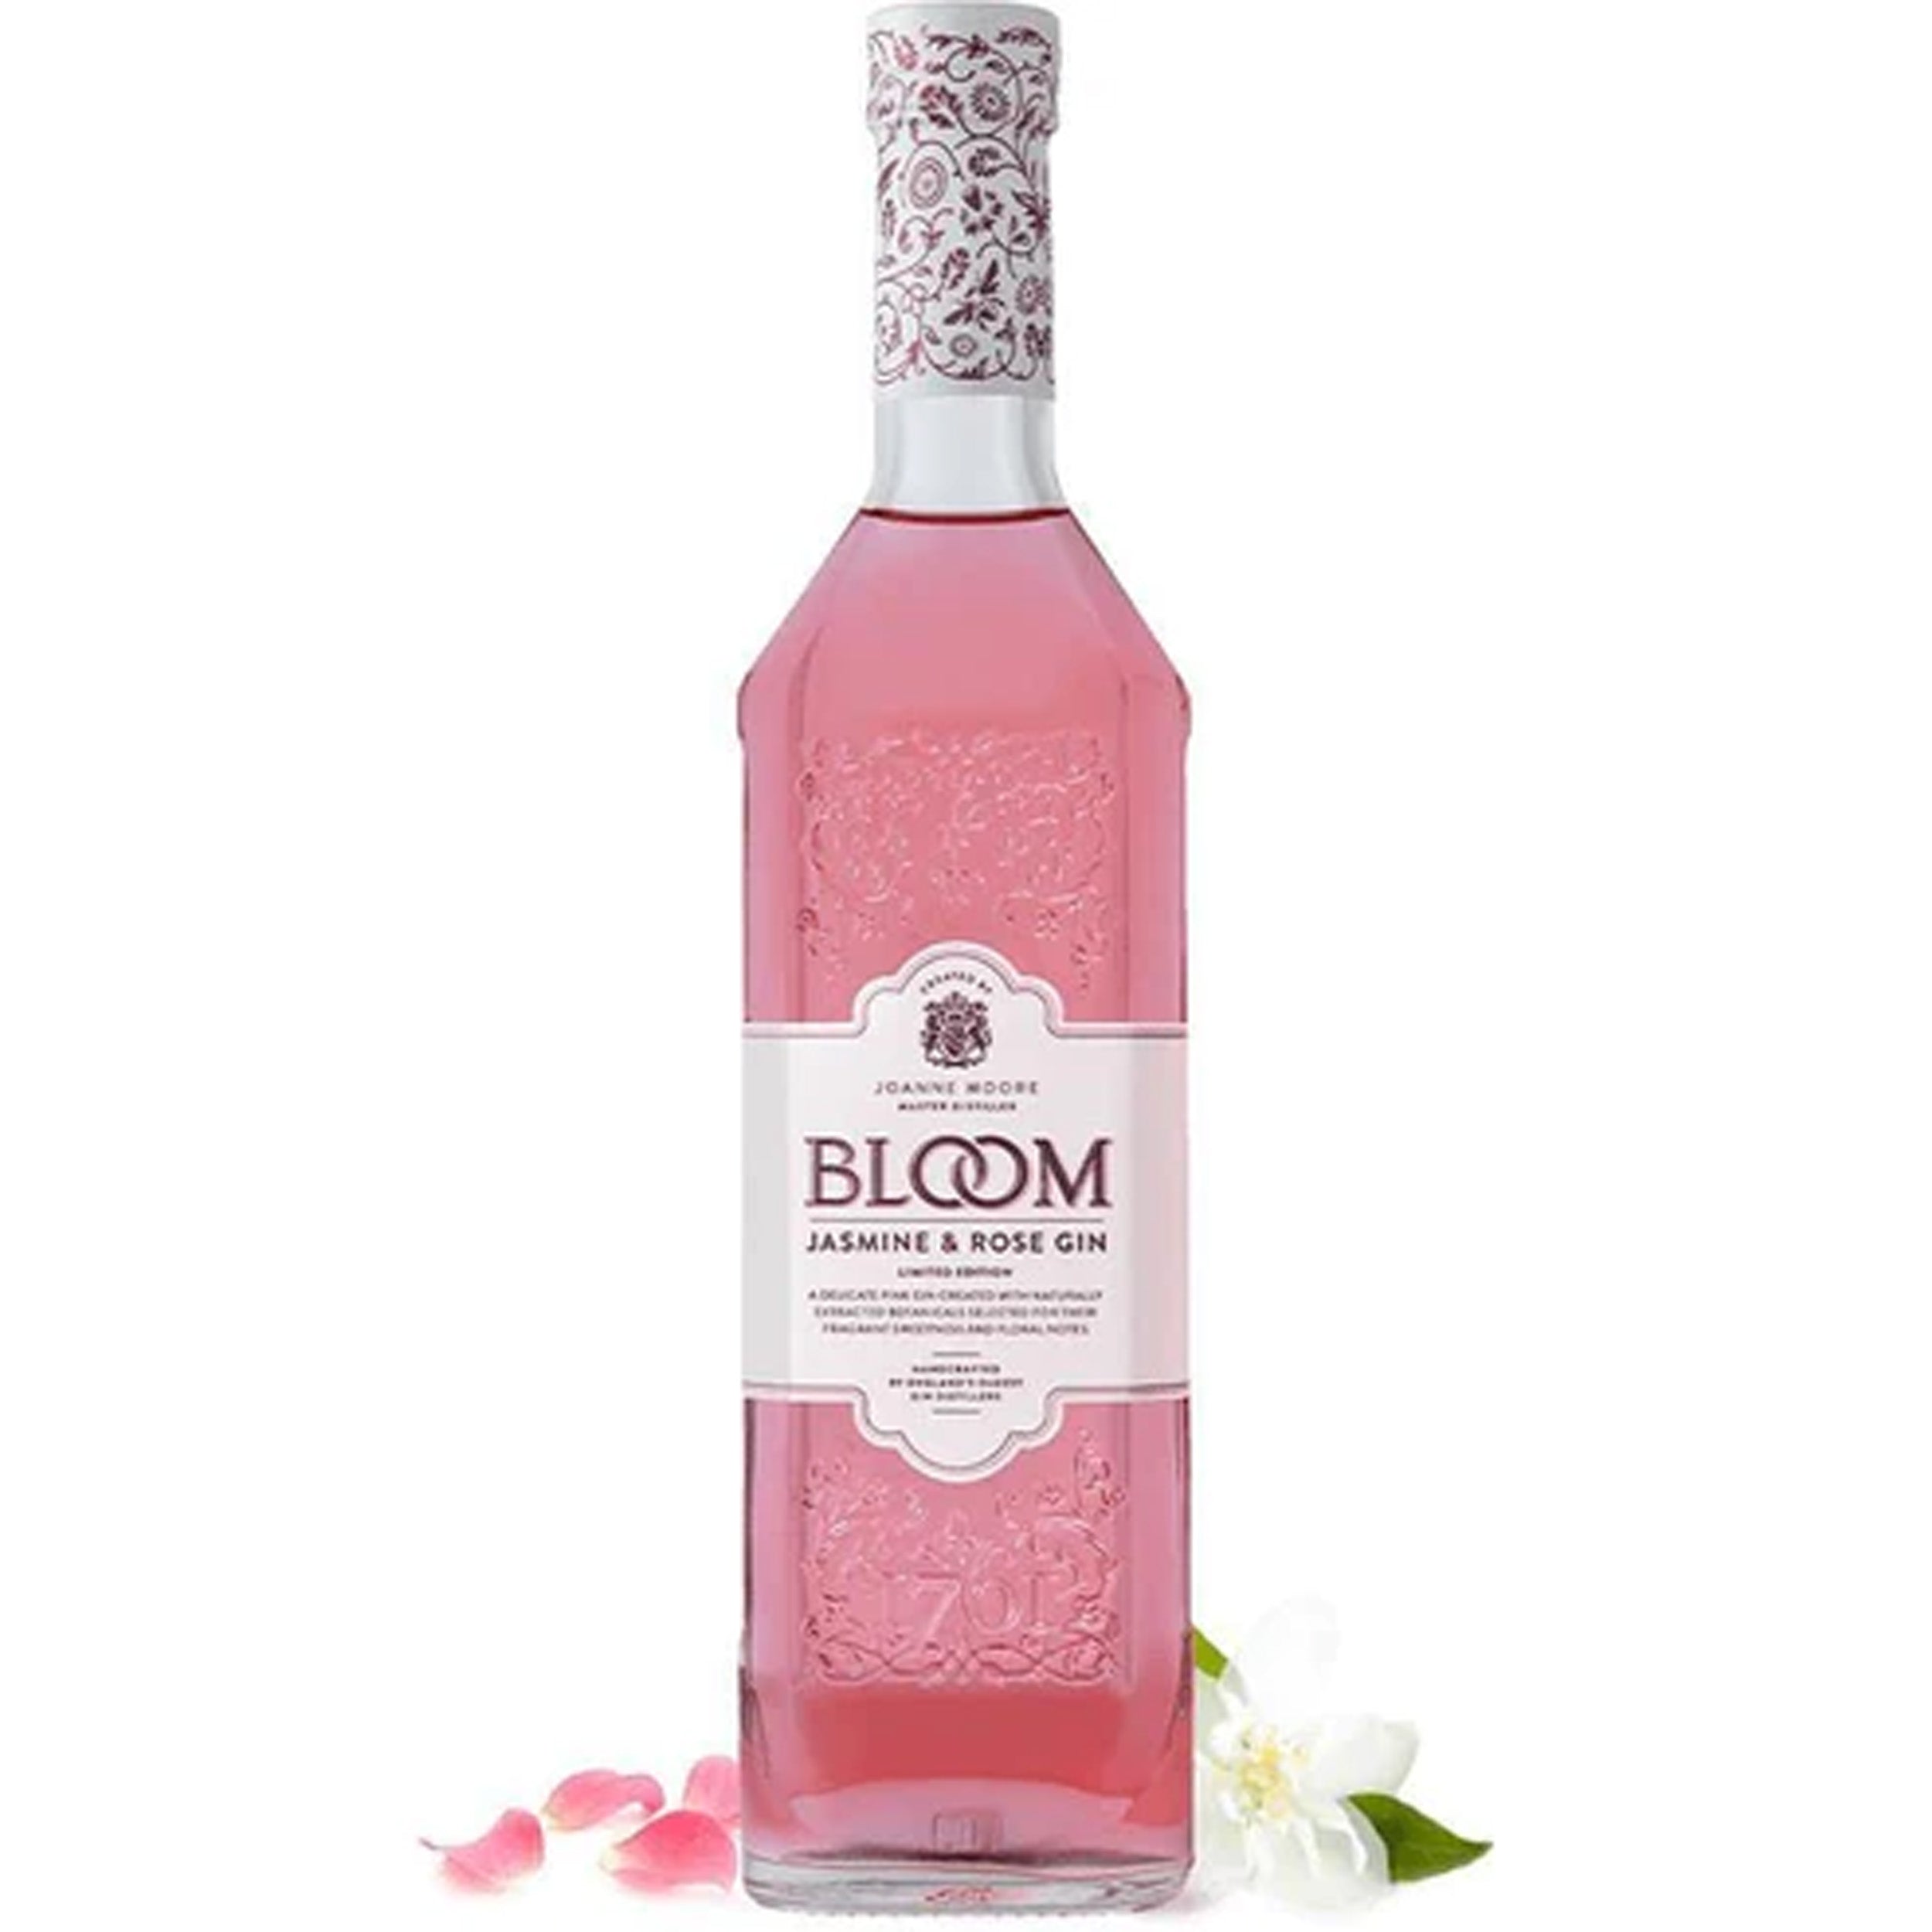 Jasmine – Rose Gin Bloom Chips and Liquor